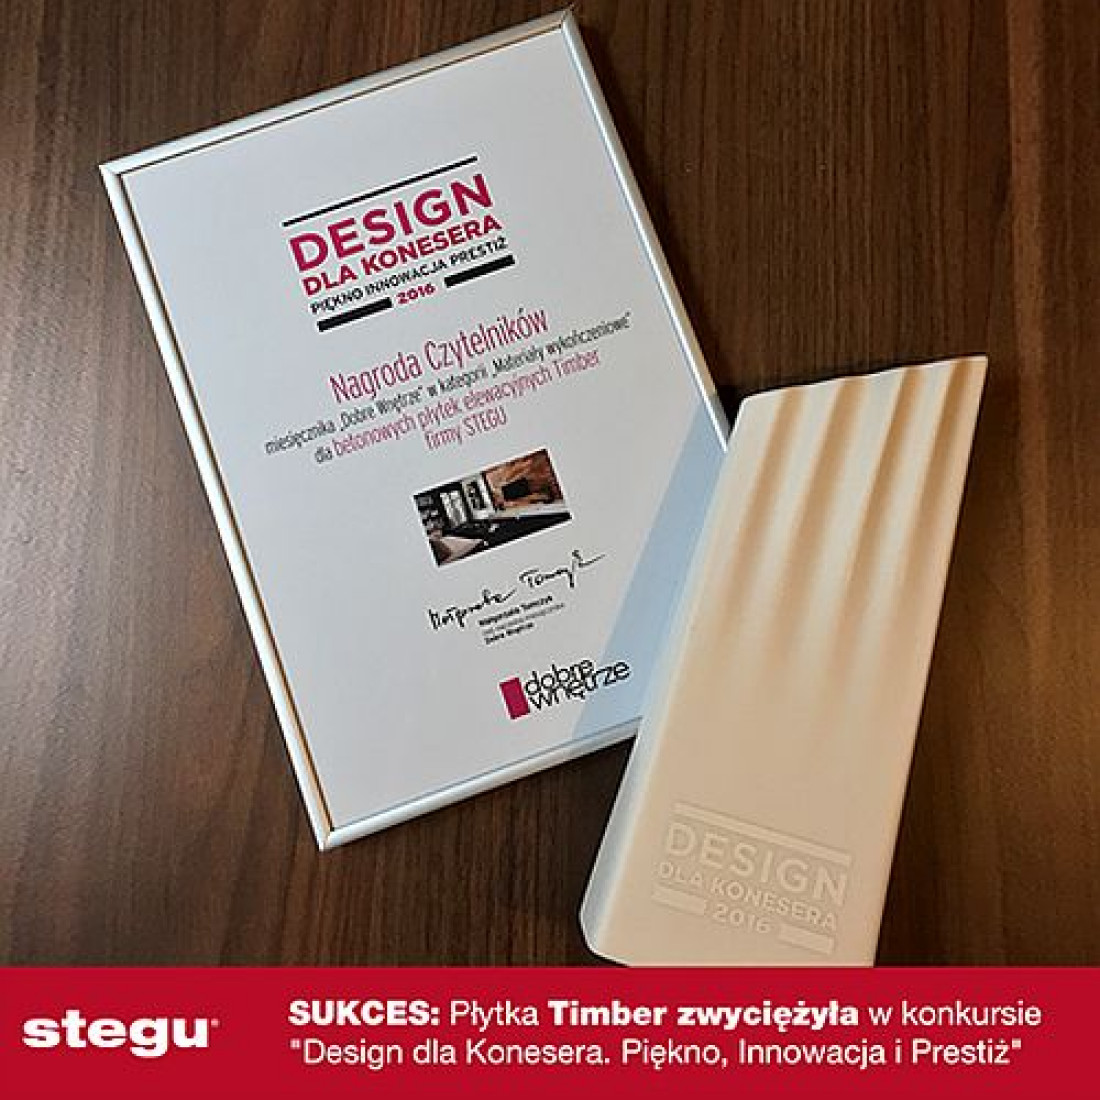 Nagroda "Design dla Konesera" dla płytki Timber firmy Stegu!